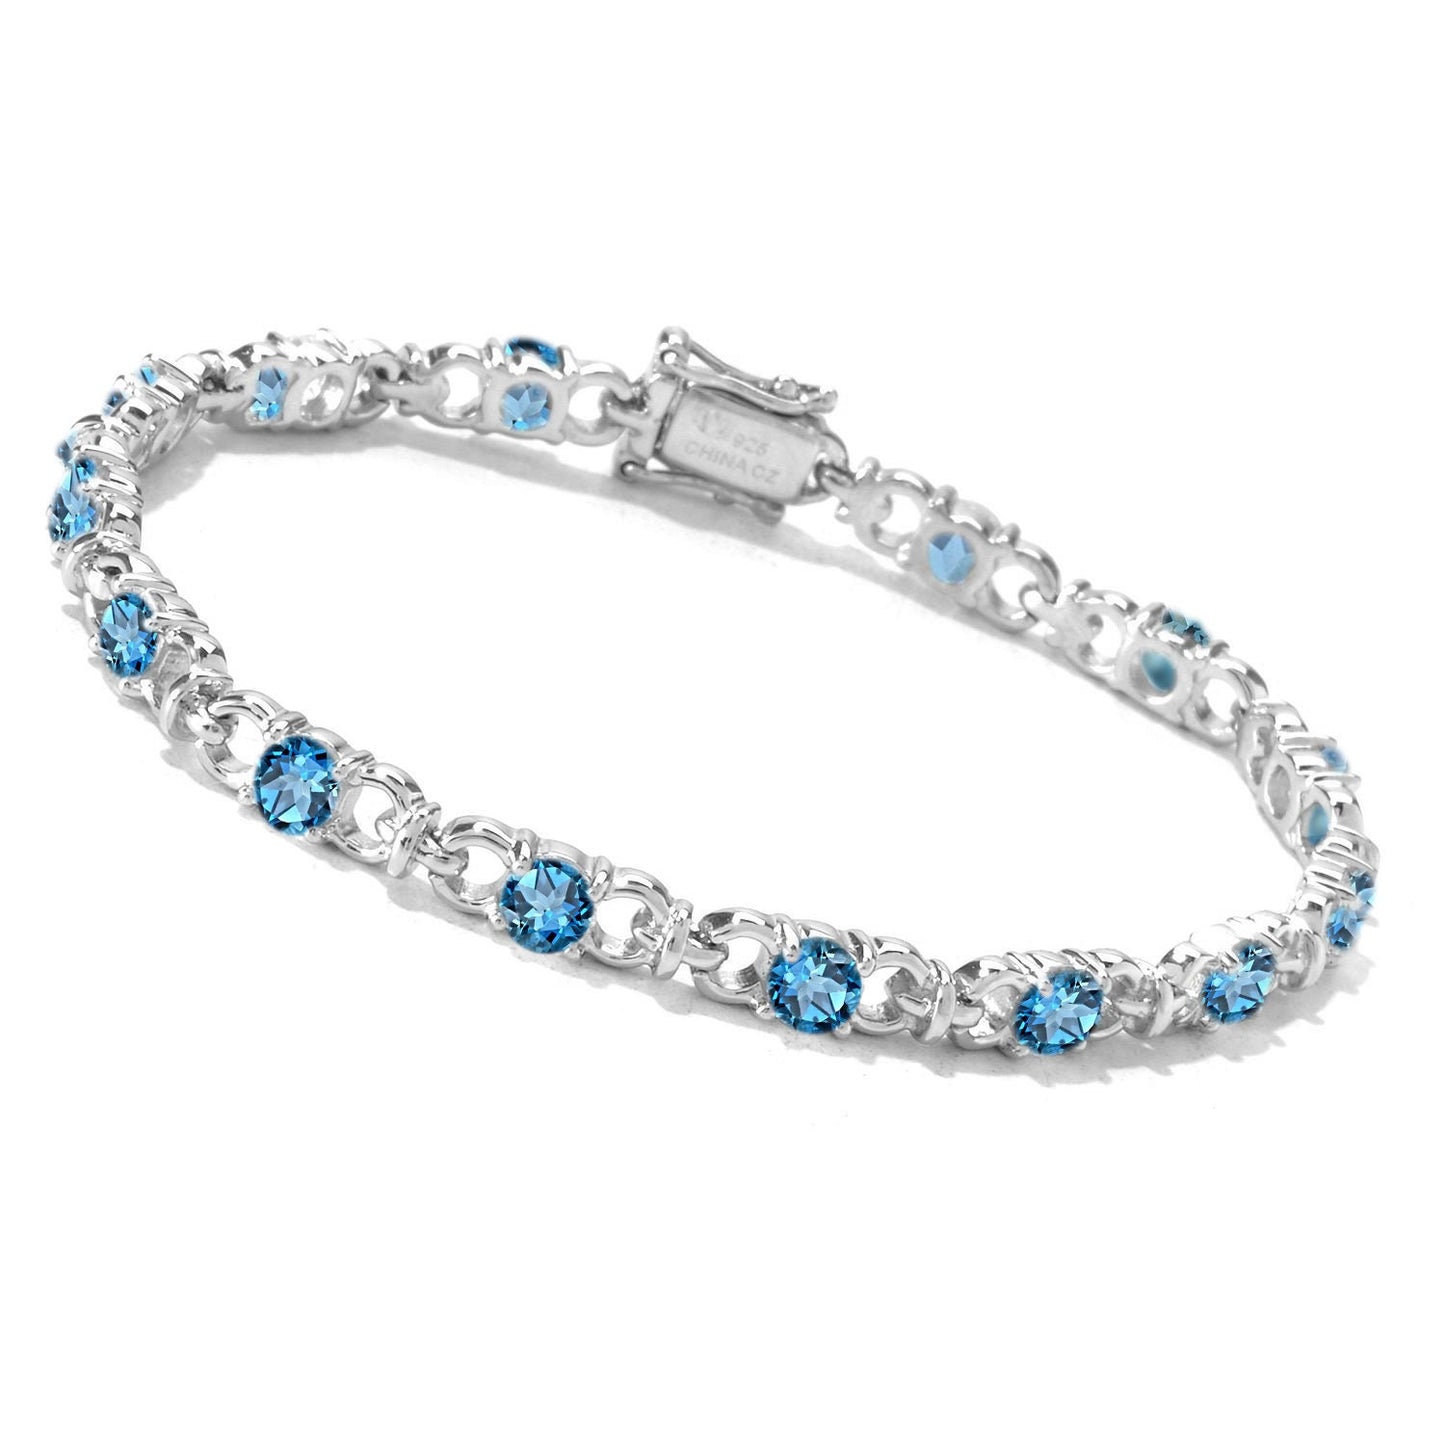 925 Sterling Silver Bracelet Natural London Blue Topaz Gemstone Bracelet, Wedding Jewelry, Anniversary Gift For Her